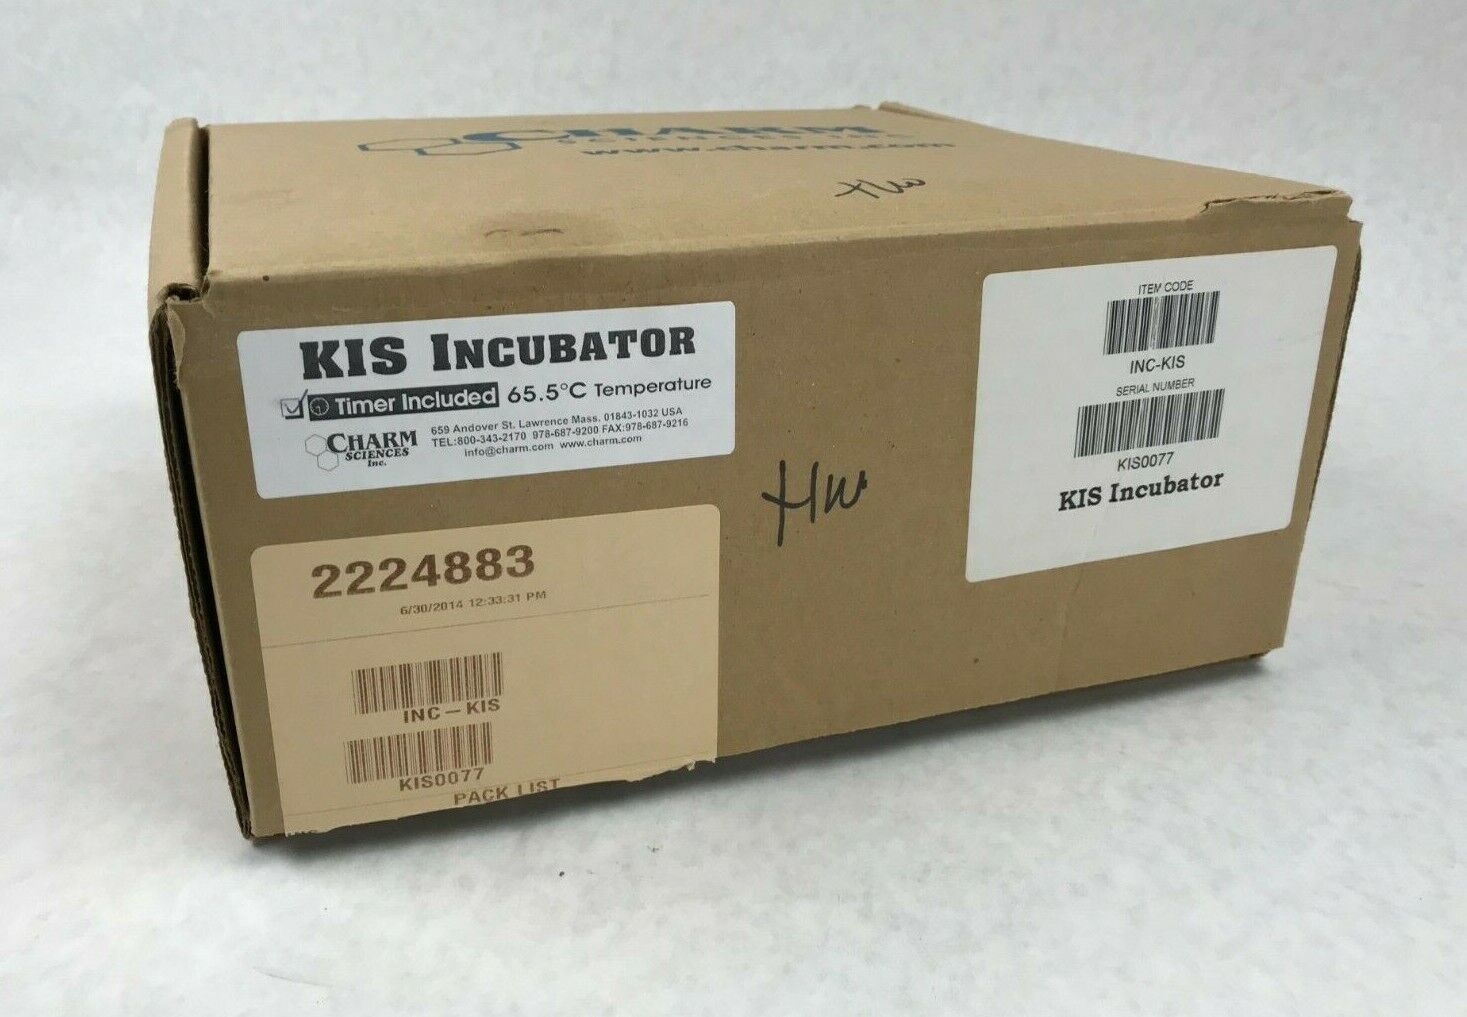 Charm Sciences KIS Incubator INC-KIS 0077